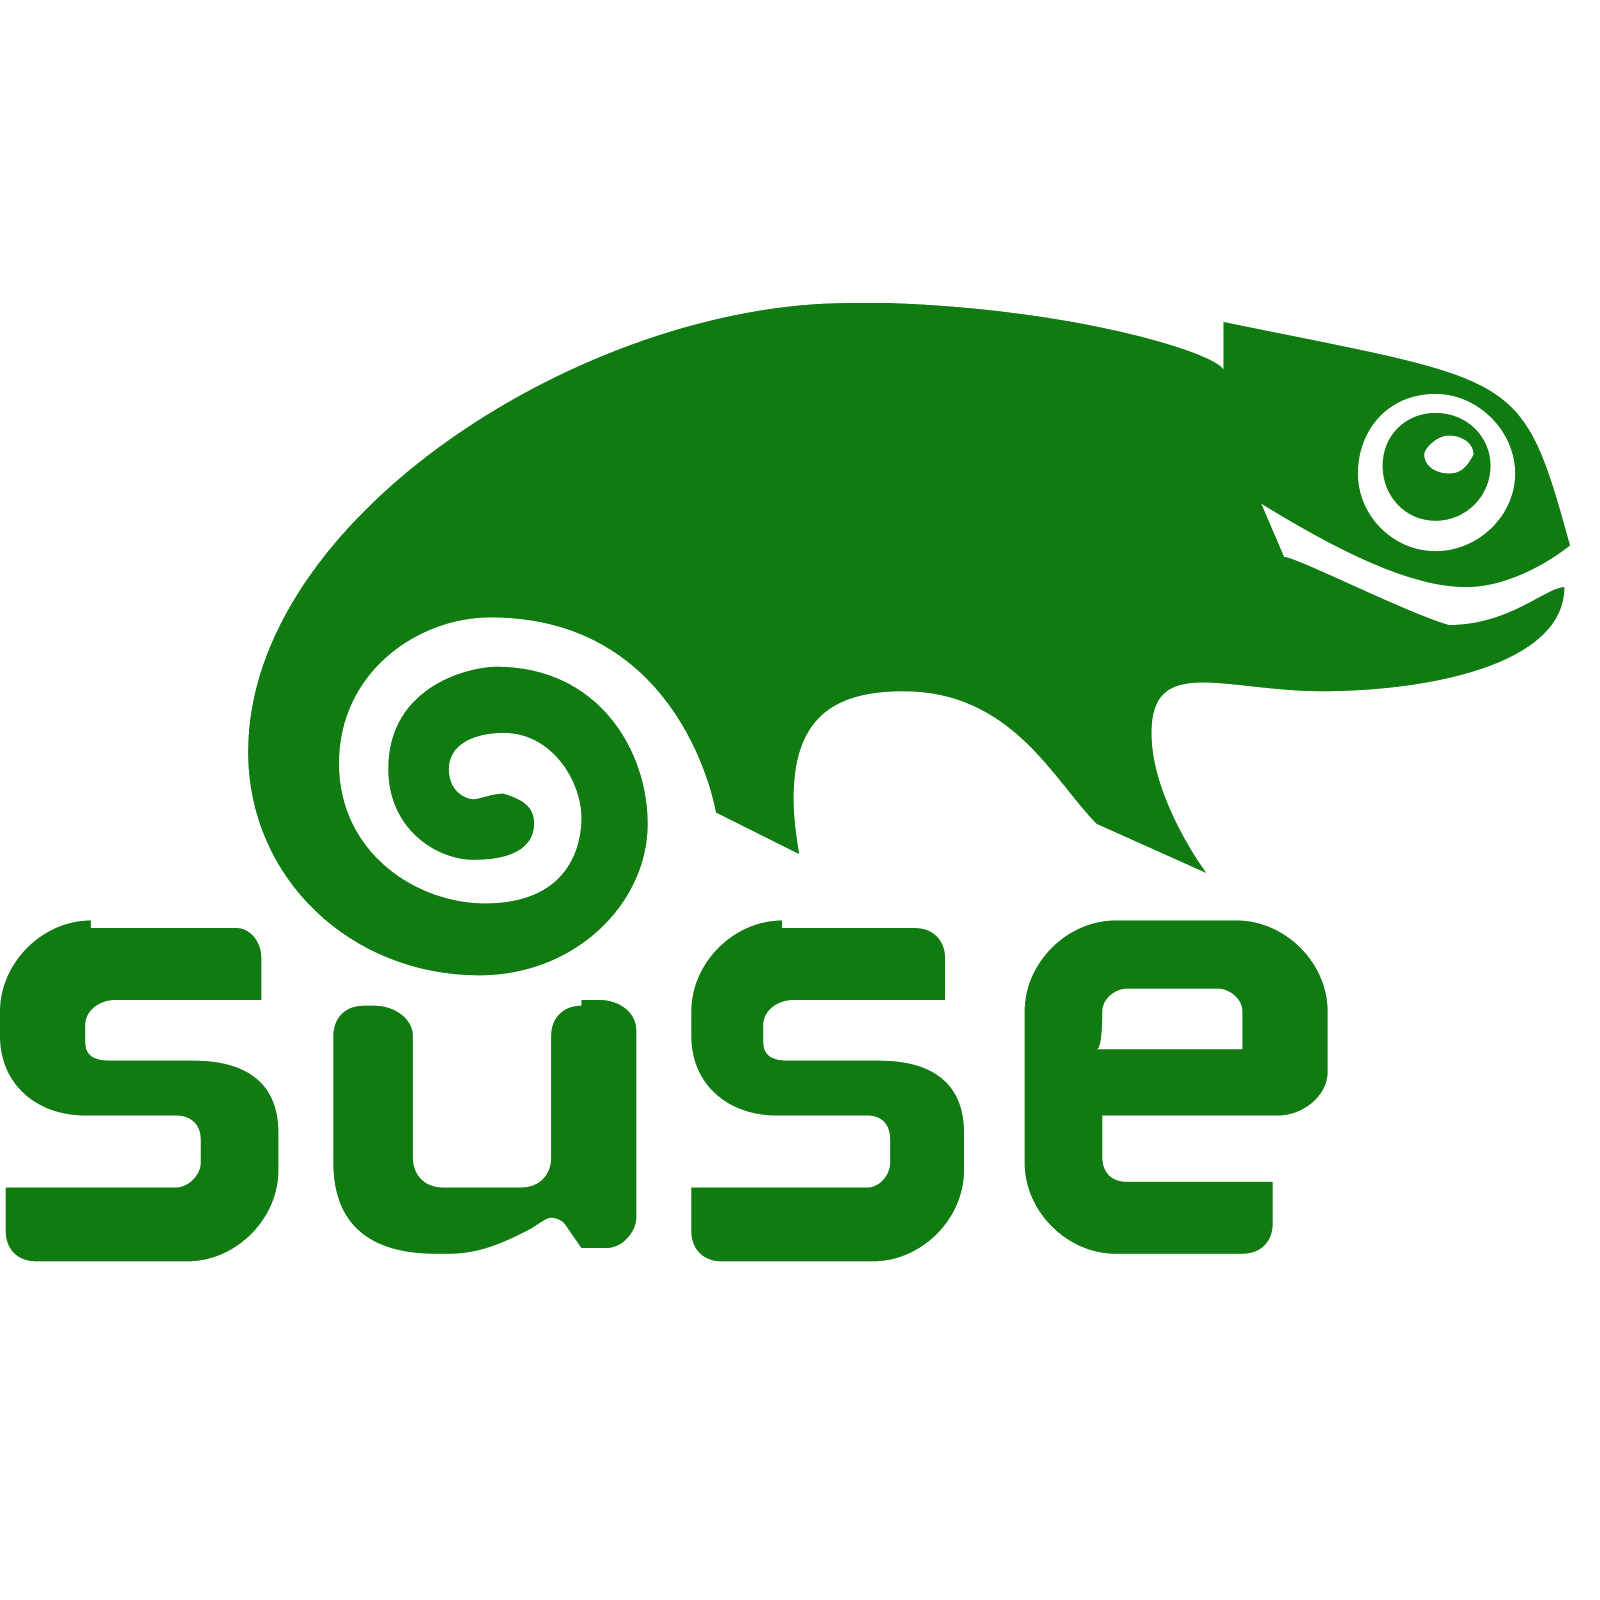 Suse Linux Opensuse Studio Enterprise Distributions PNG Image